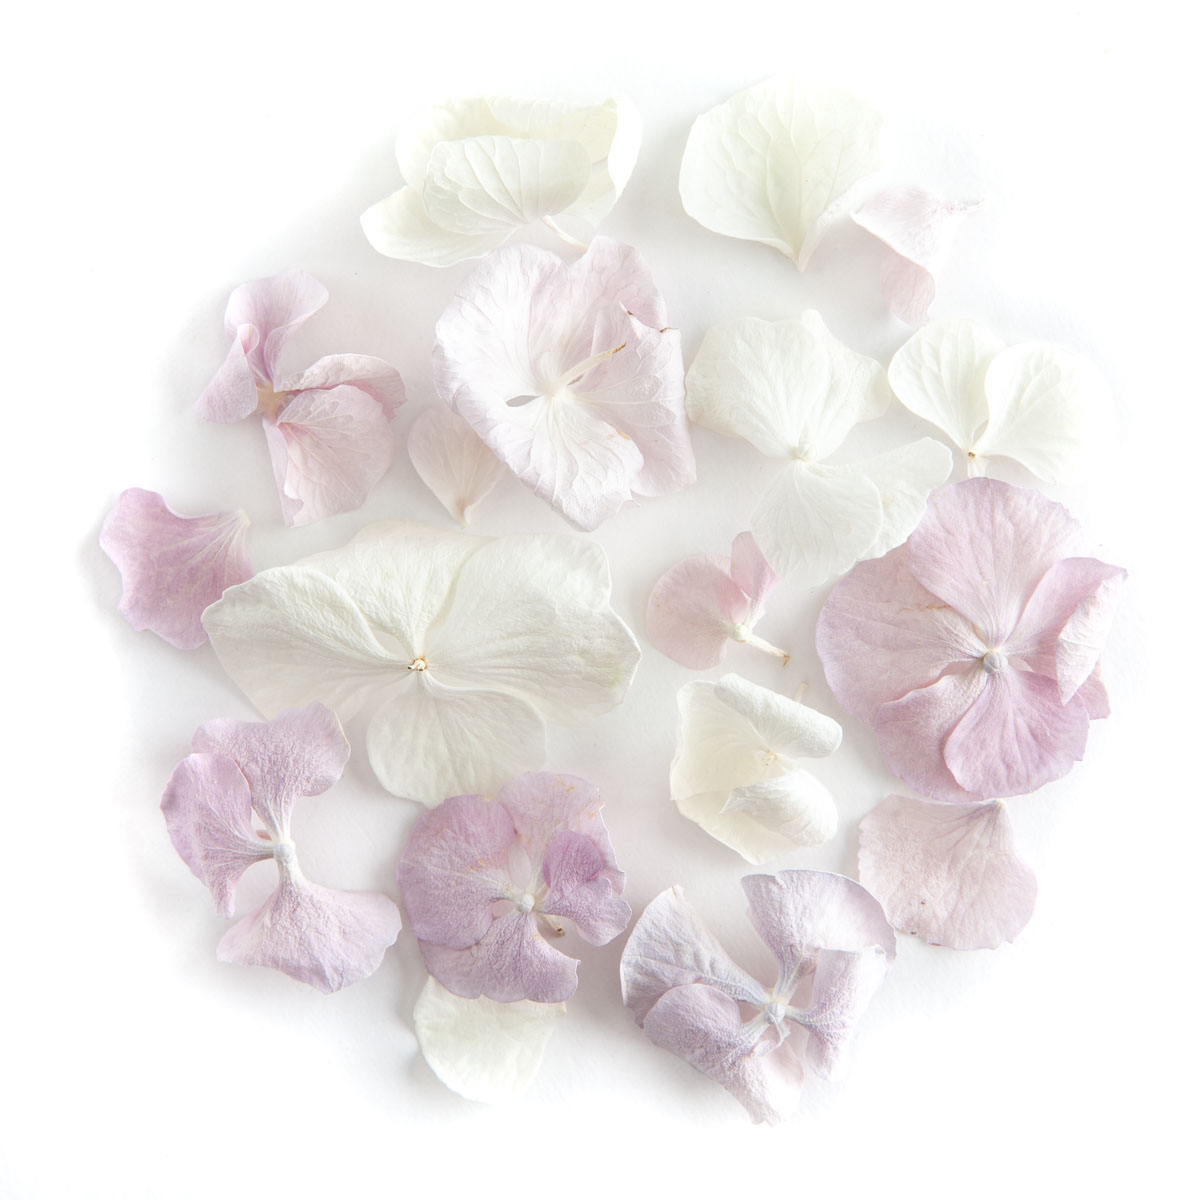 Lilac and White Hydrangea Petals